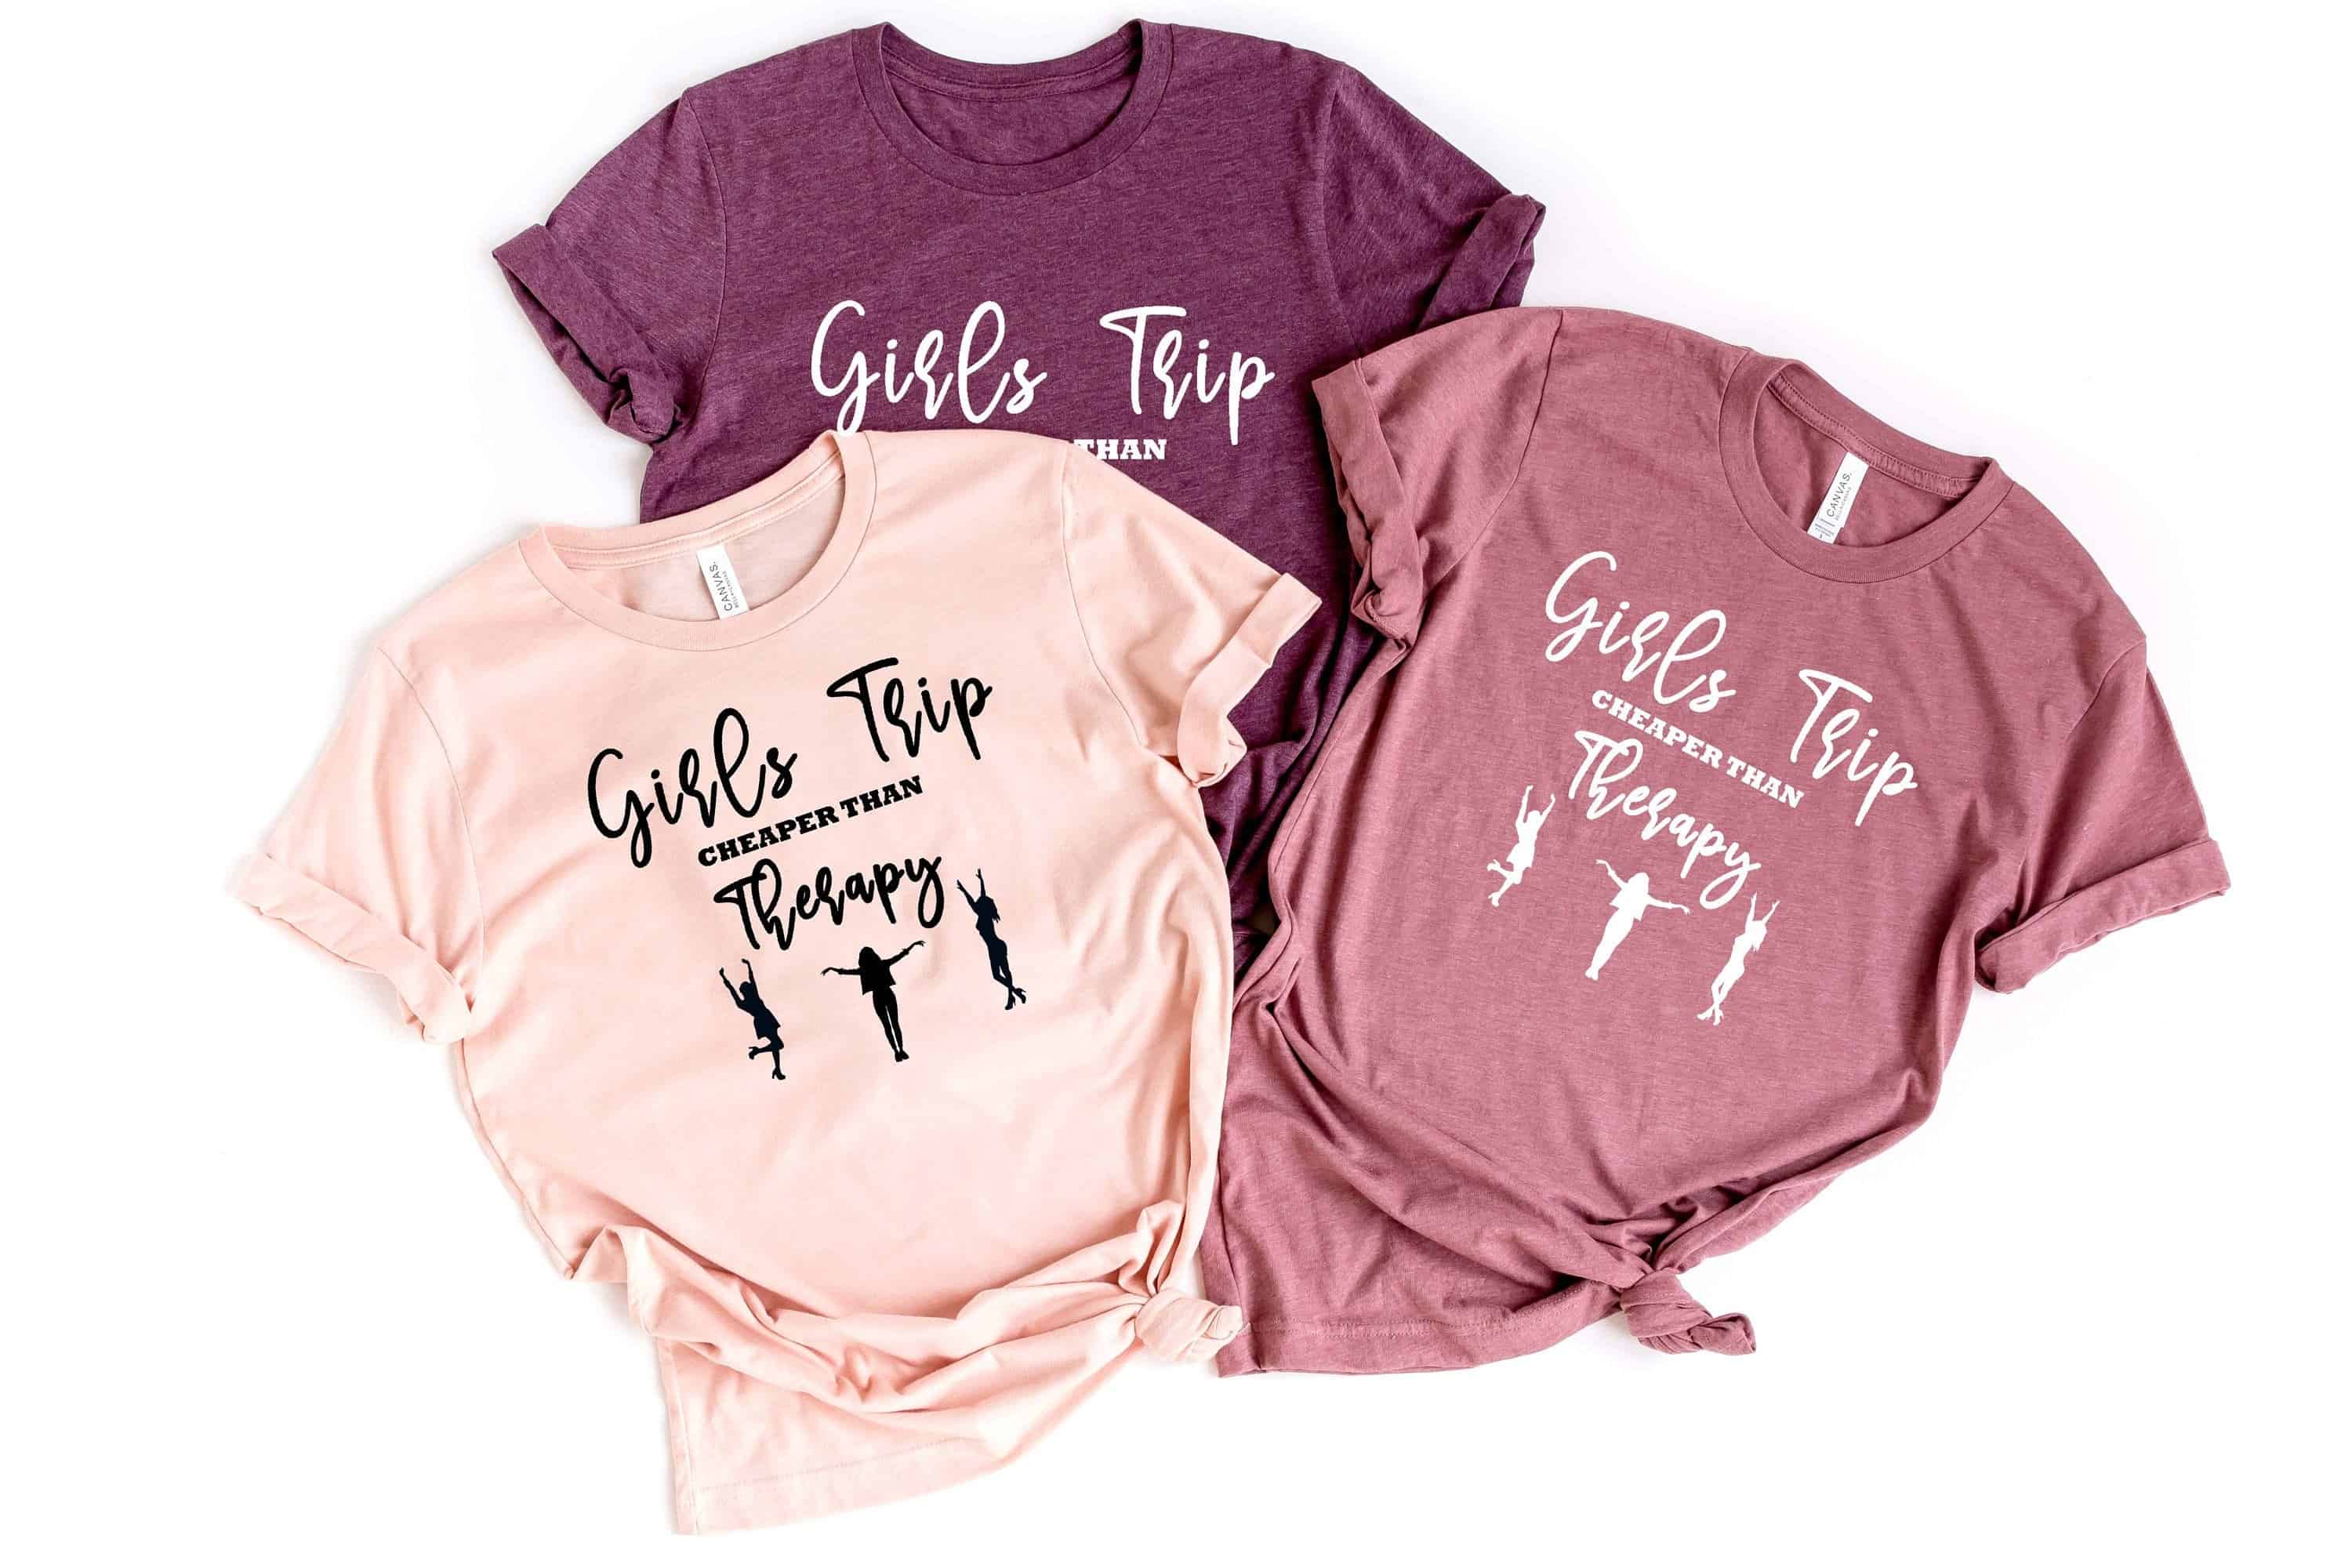 Besties shirts Trip Matching Girl Vacation Tshirt Girls Trip TShirts Best Friends shirts Girls Trip cheaper Than Therapy 2021 Tshirts